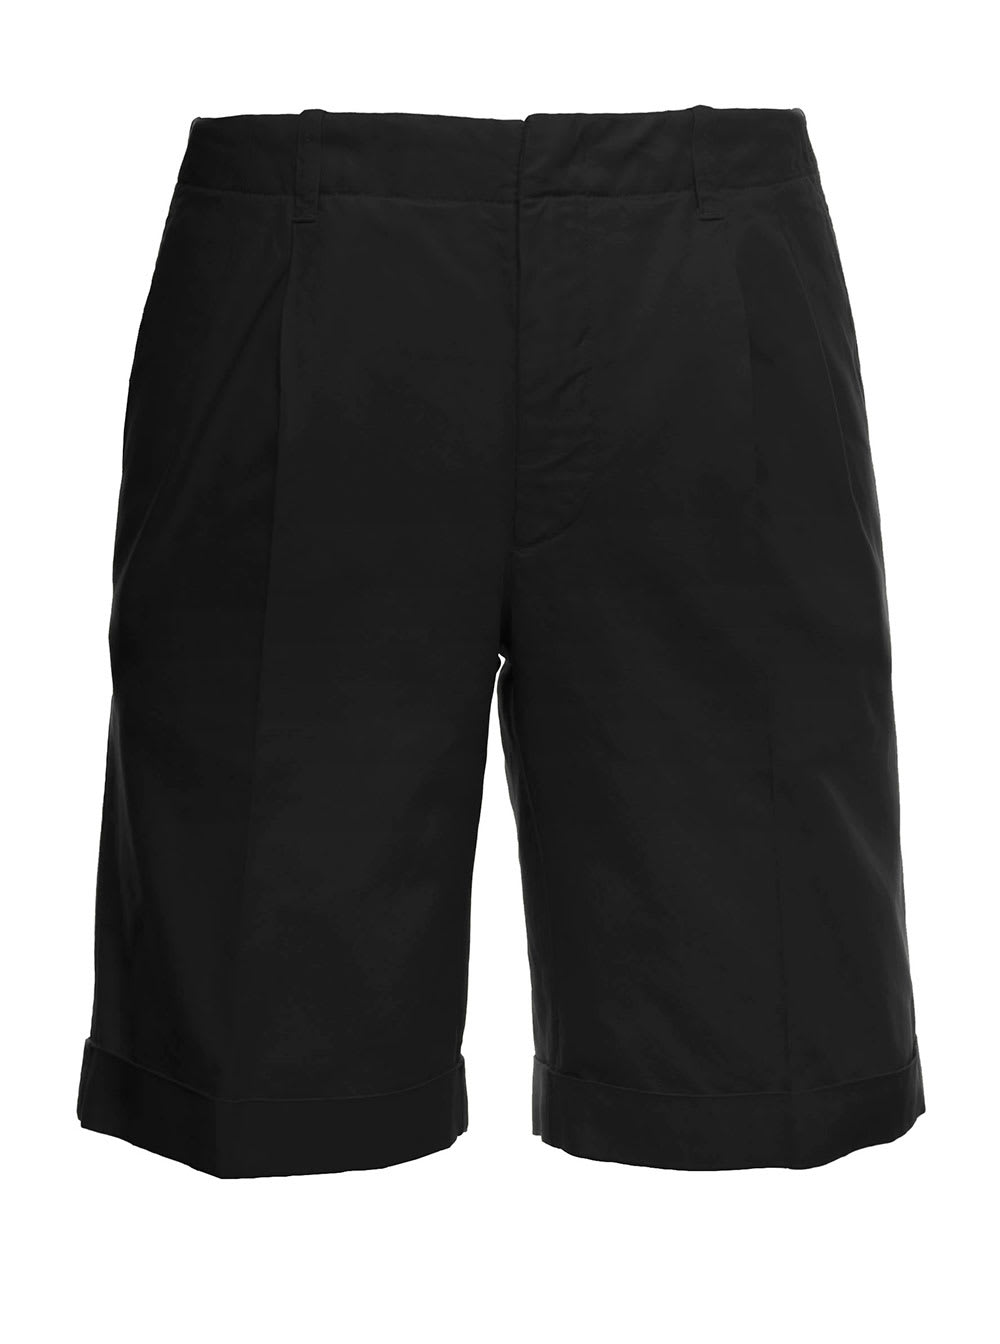 Z Zegna Black Cotton Blend Bermuda Shorts